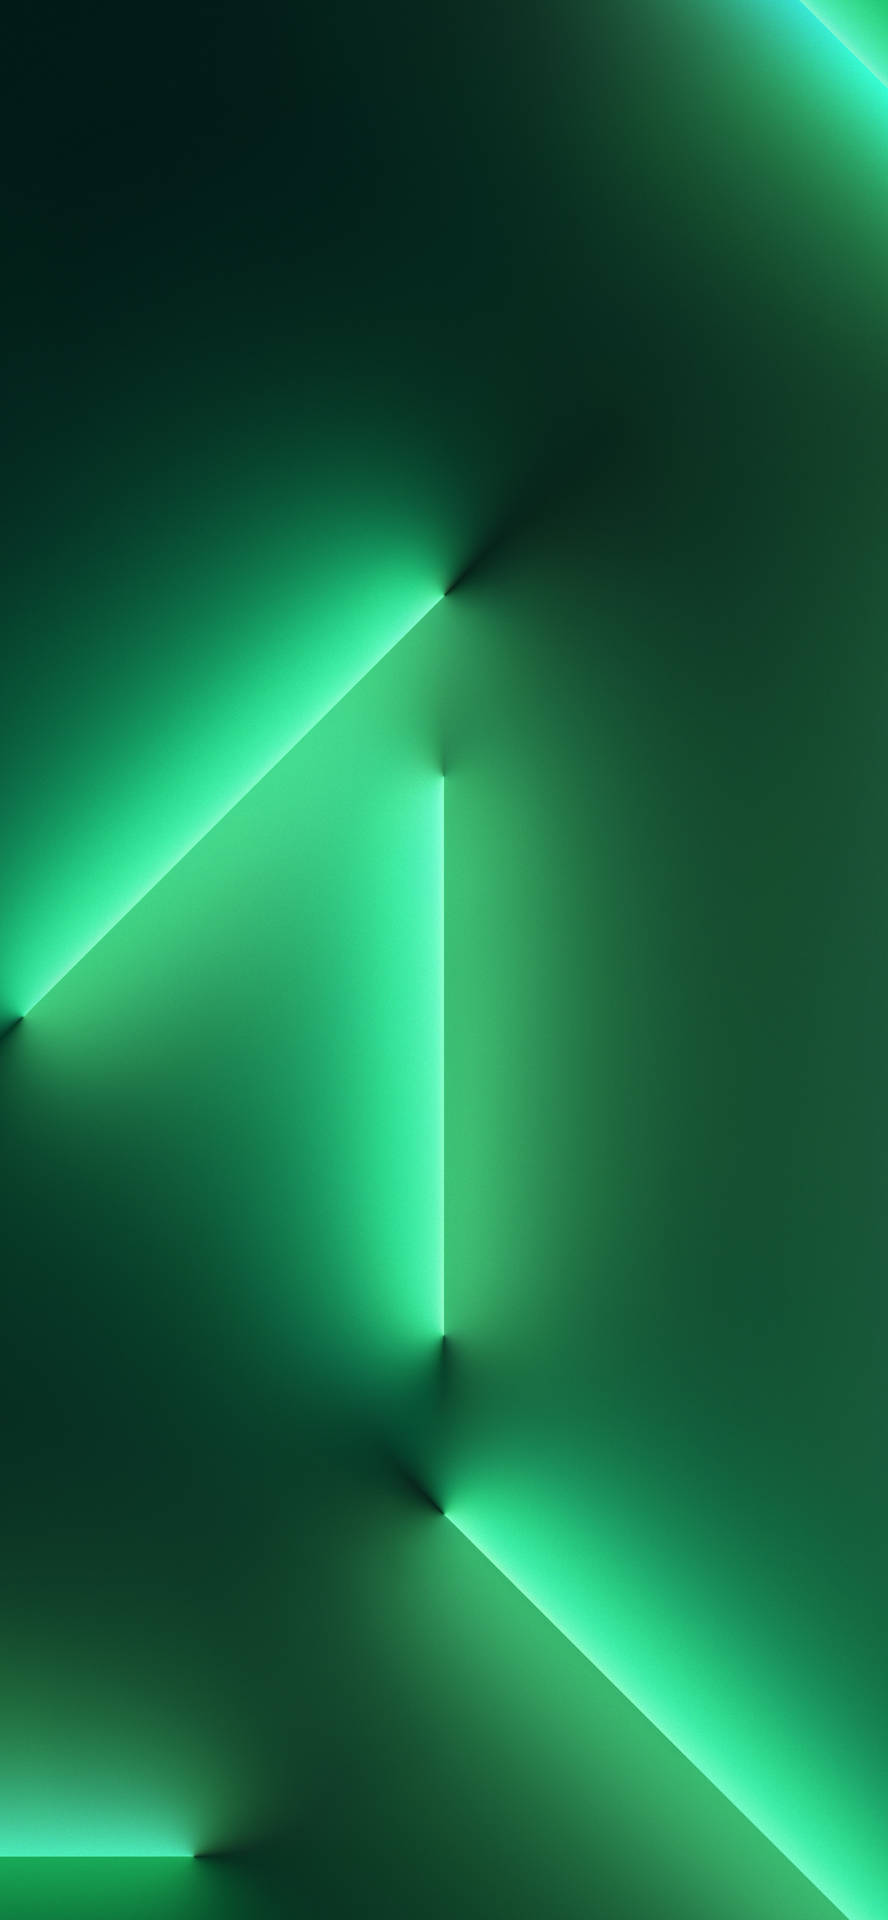 Neon Lights On A Wall Green iPhone Wallpaper